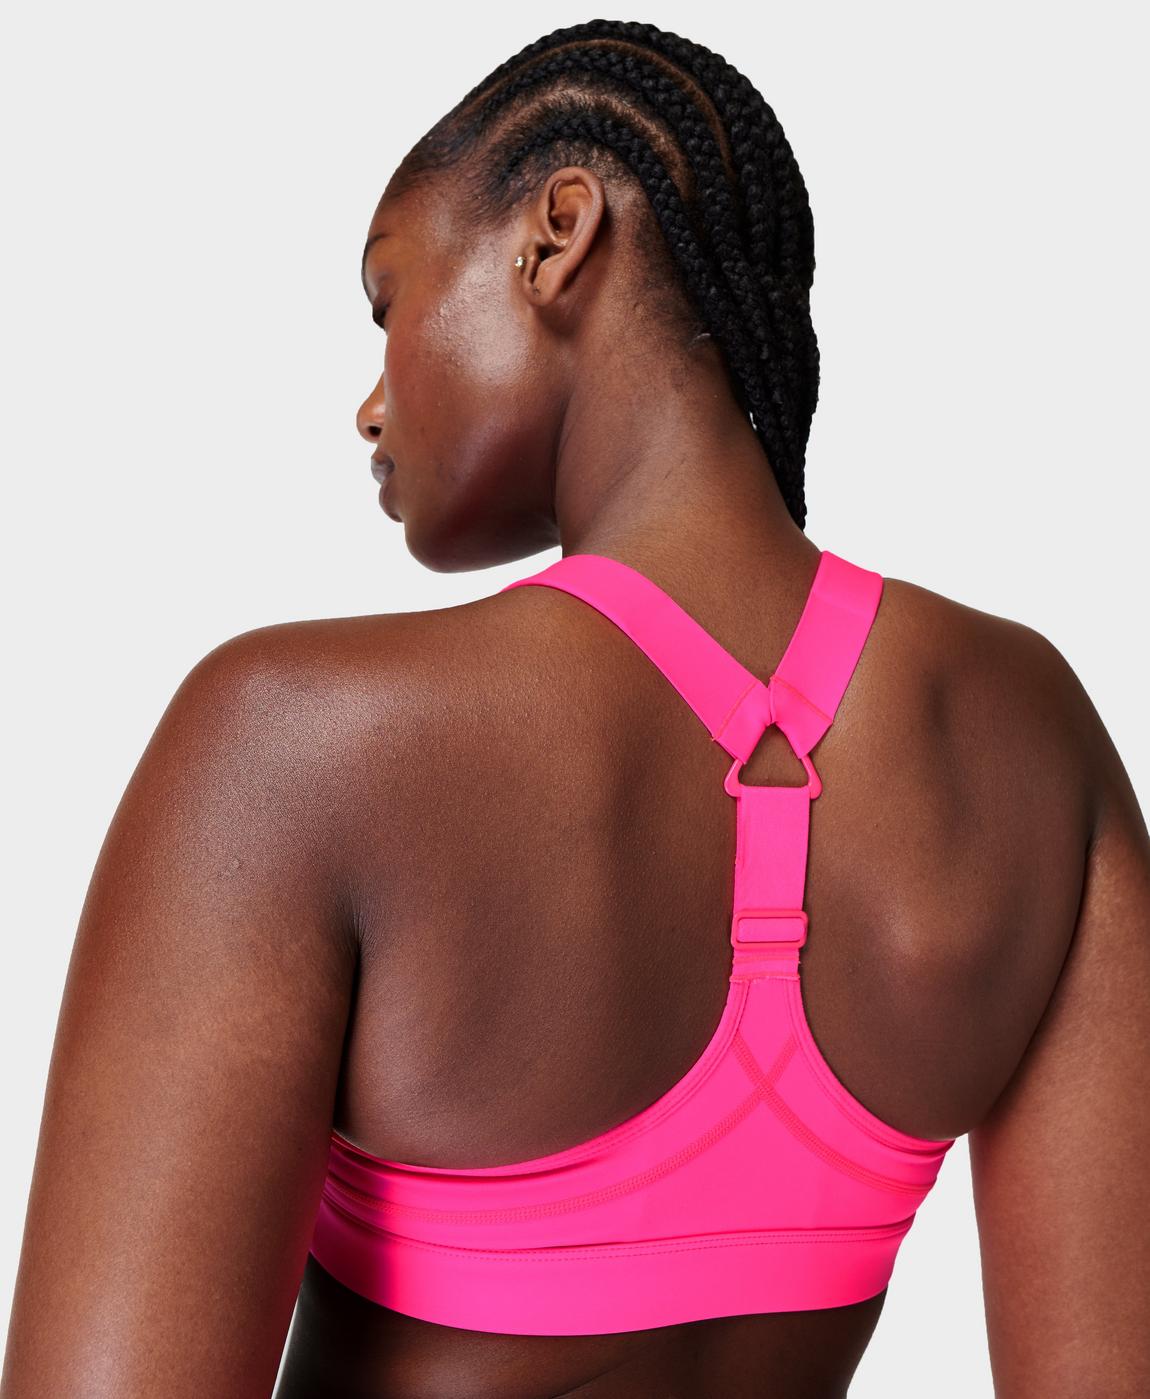 Power Medium Support Sports Bra - Hot Pink, Women's Sports Bras